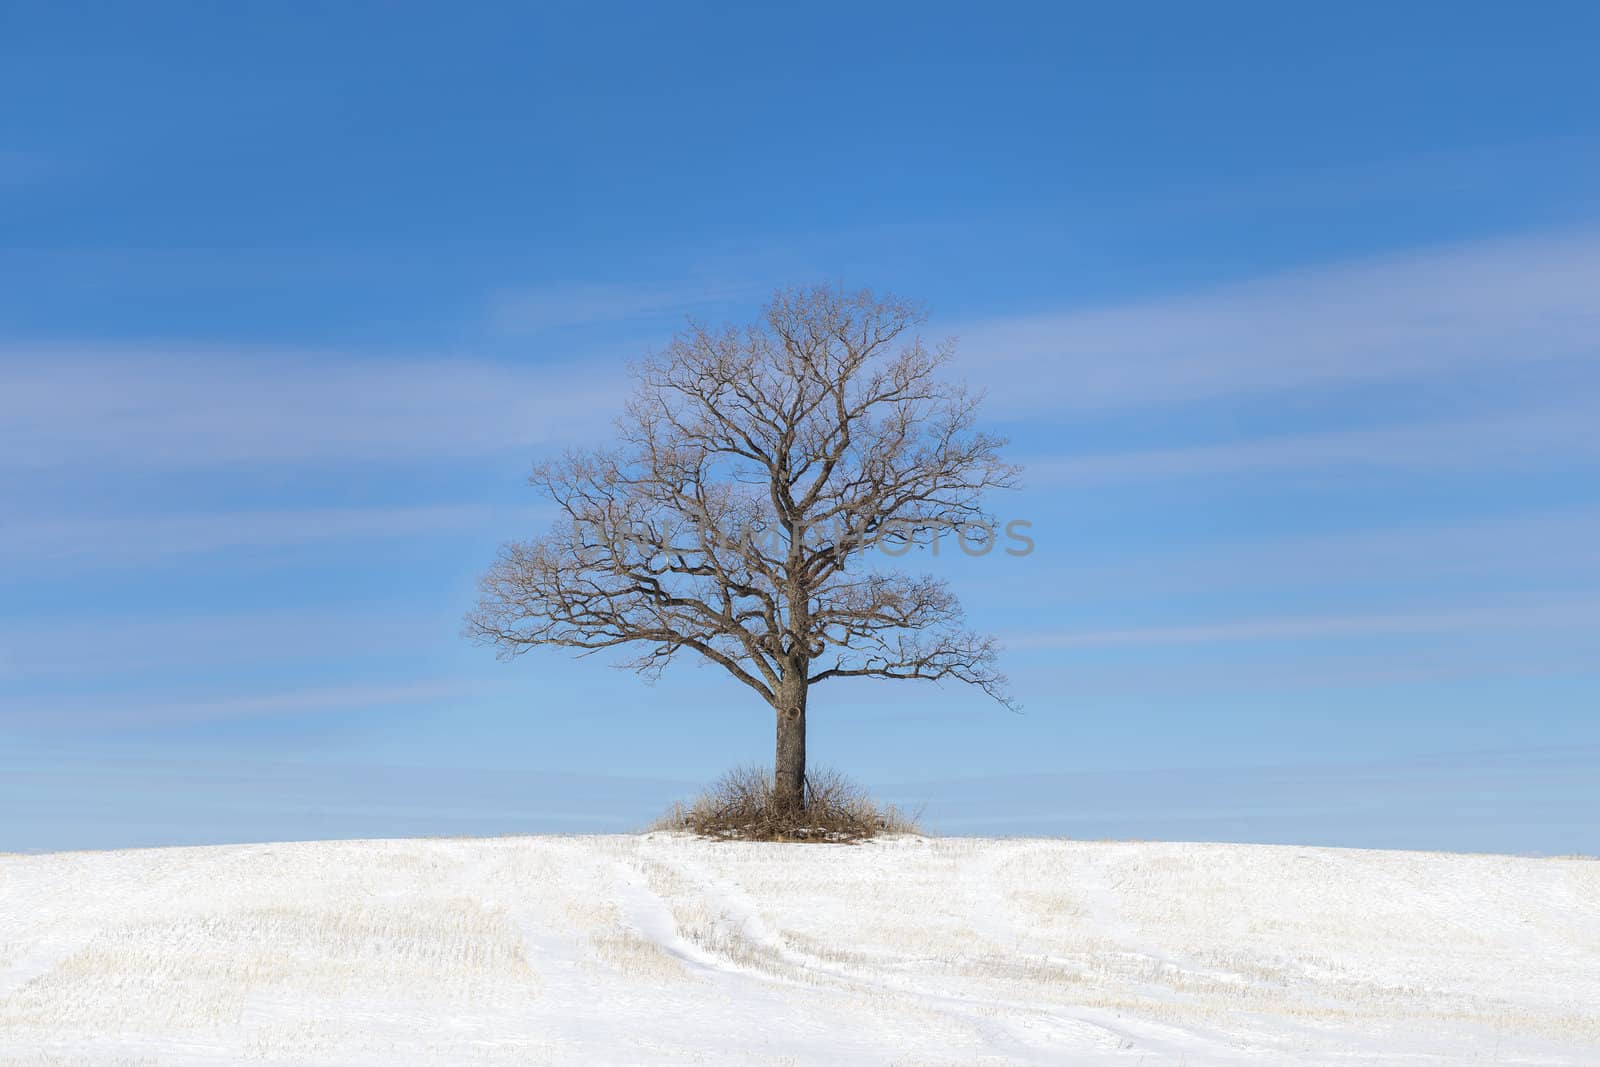 Old tree on snowy field on a blue sky bakground